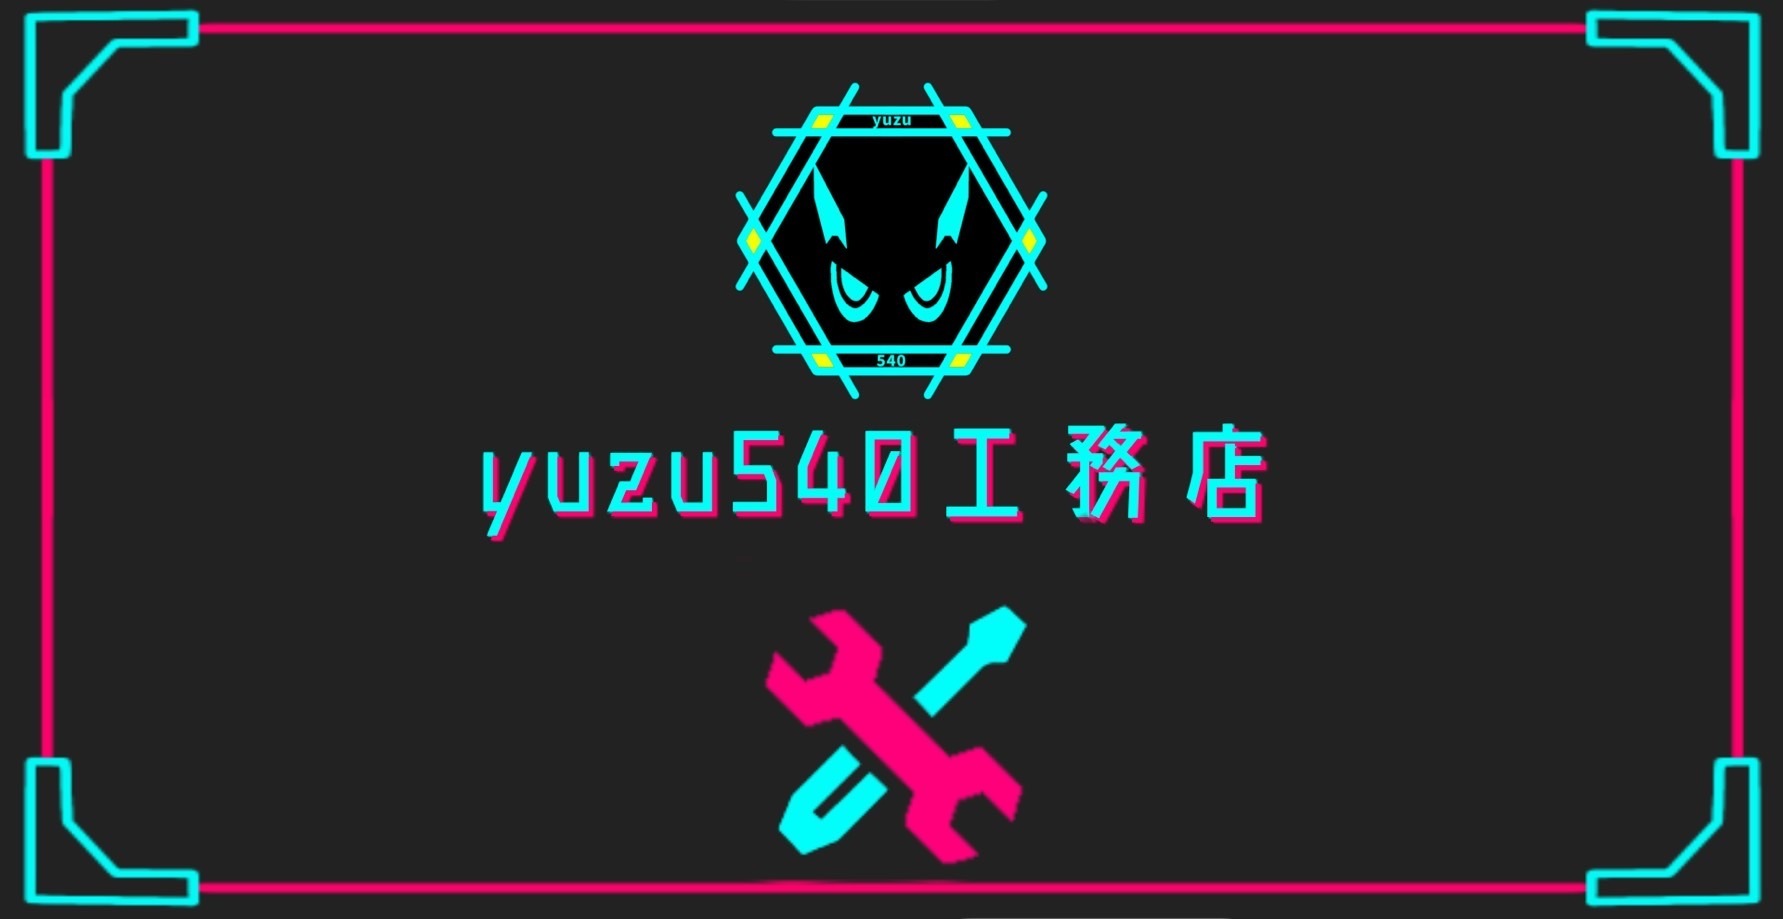 yuzu540工務店